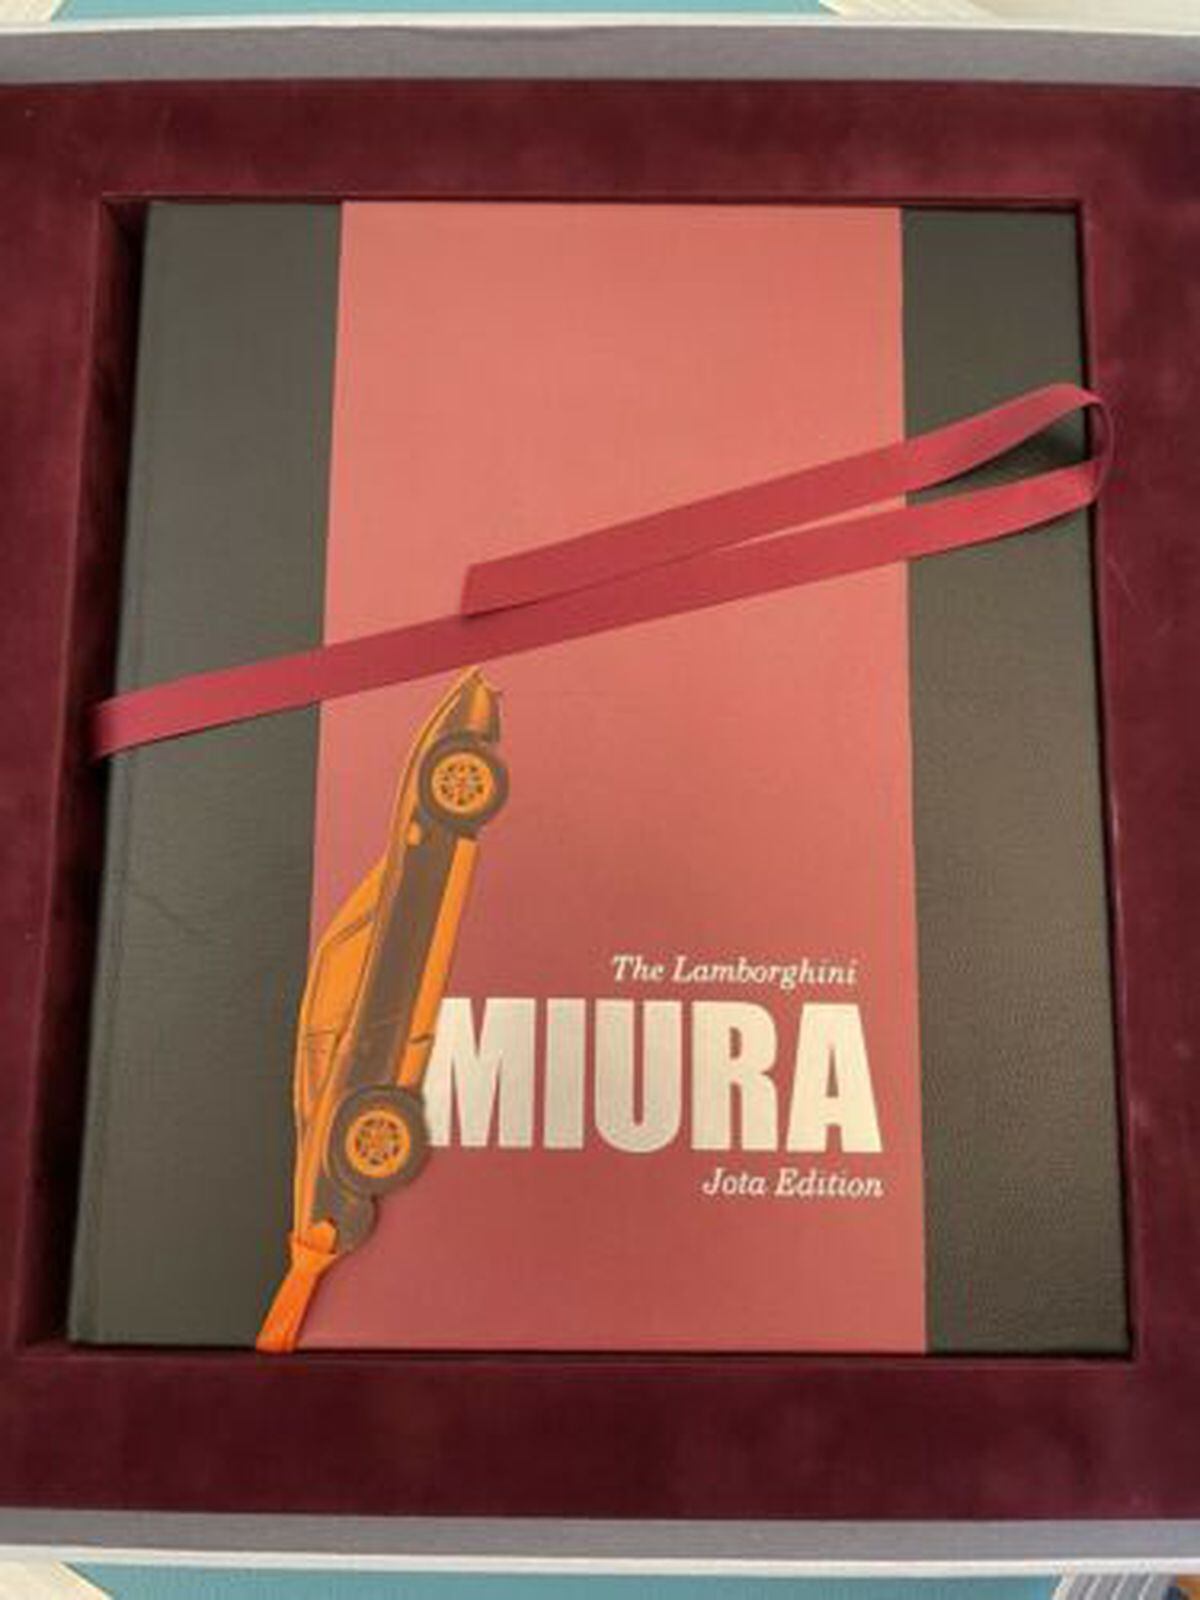 The Lamborghini Miura book, Jota edition. Photo: ebay / henrygregory90